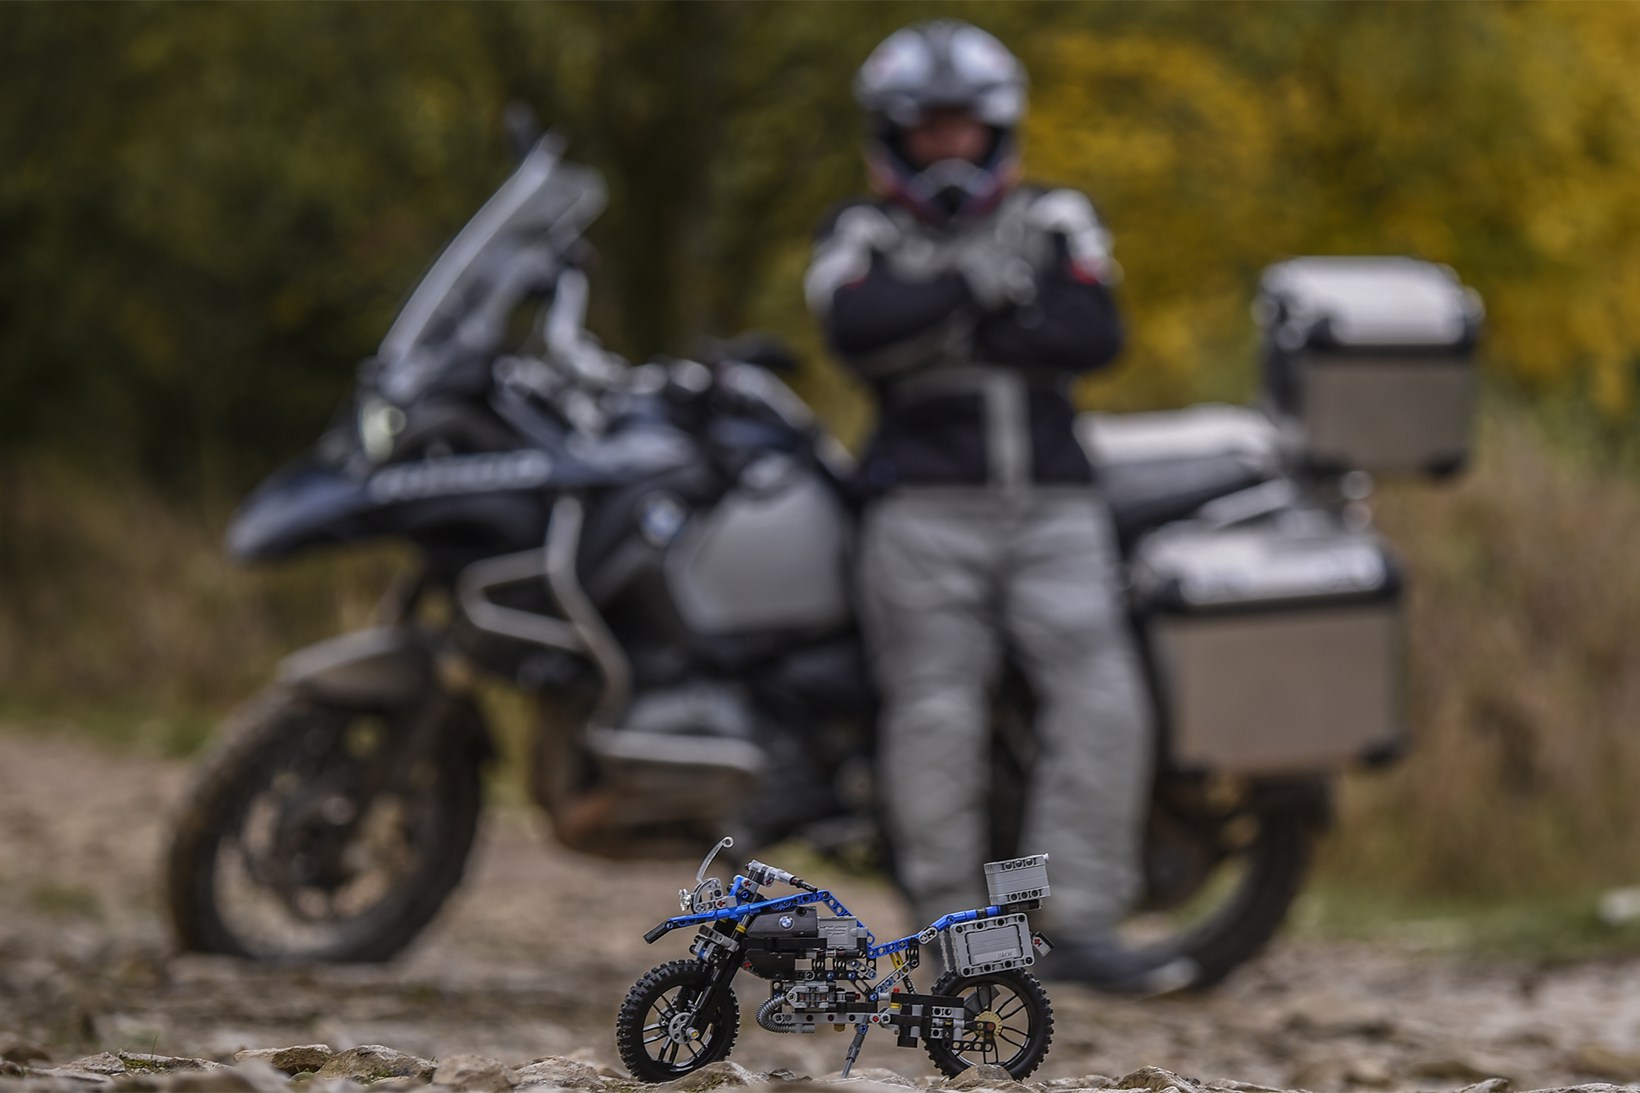 lego-bmw-r-1200-gs-adventure-motorcycle-1